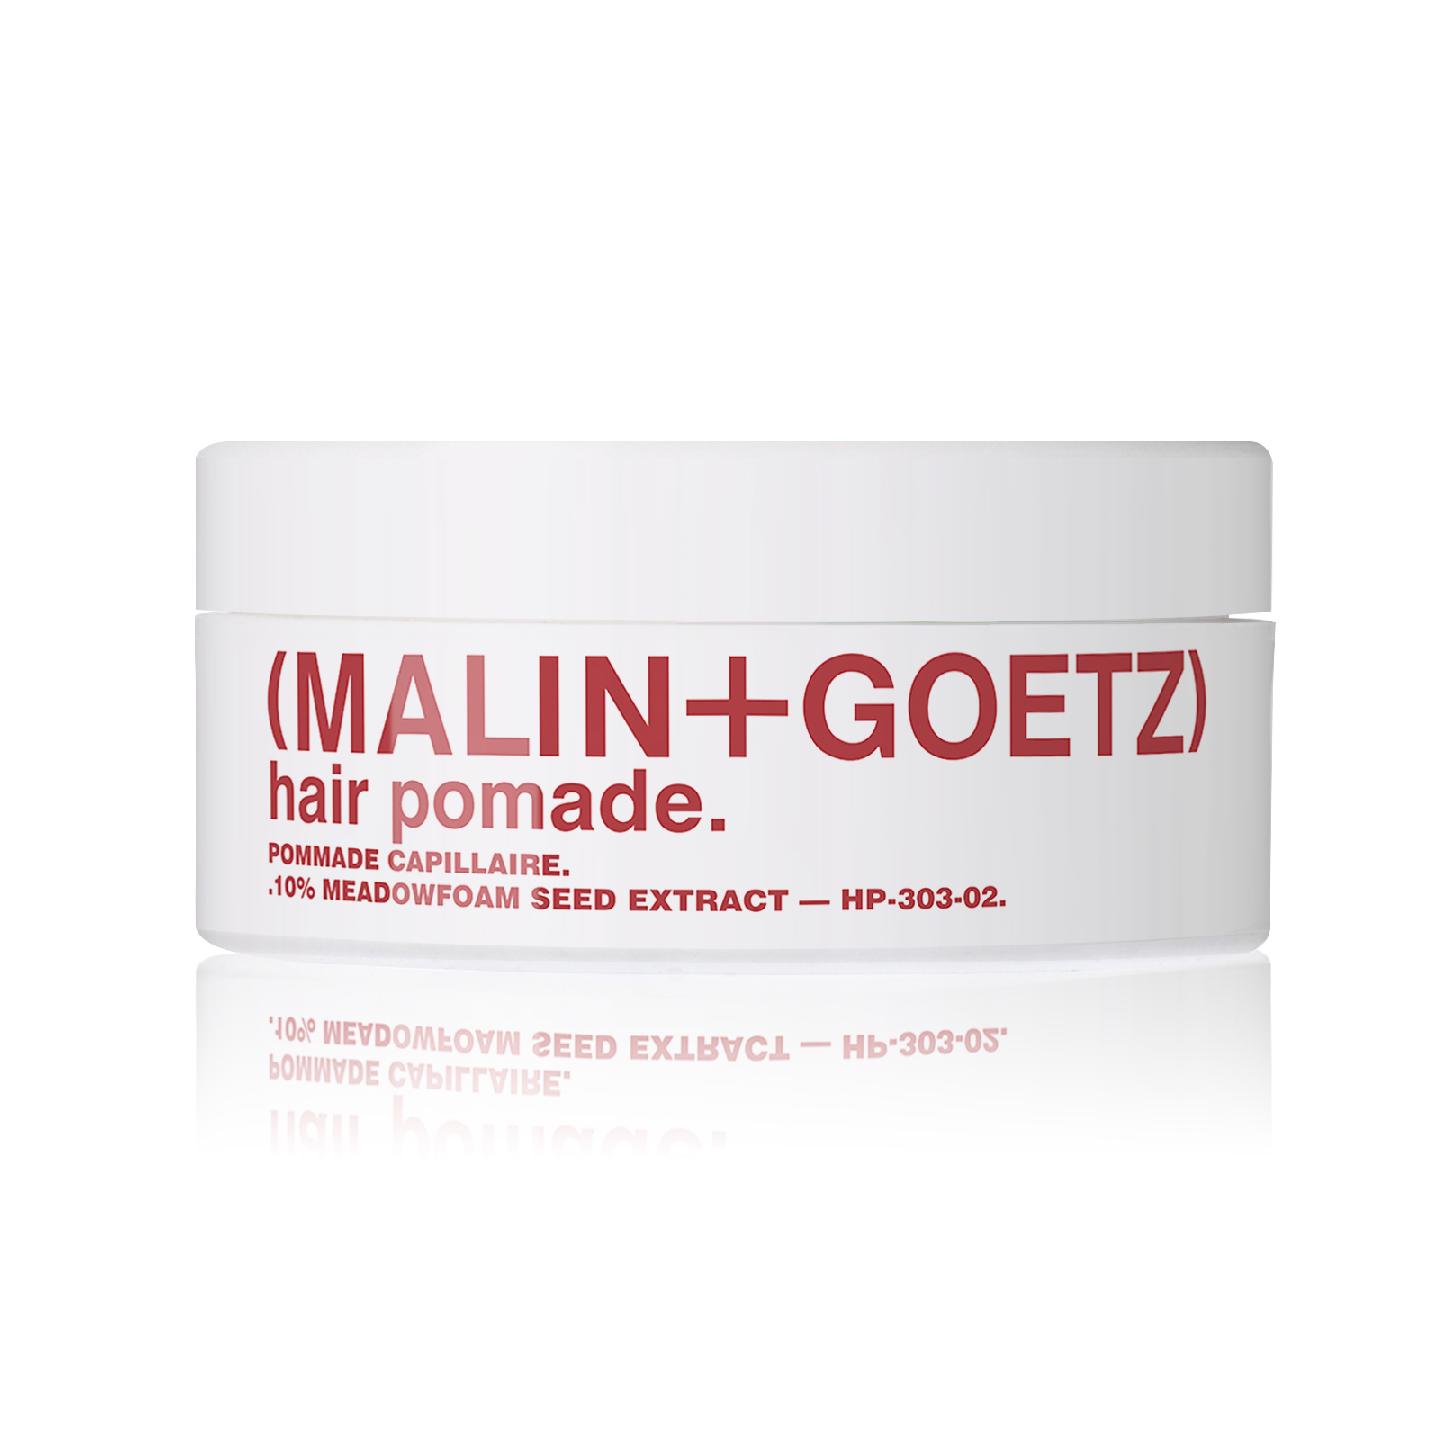 Malingoetz помада для укладки волос